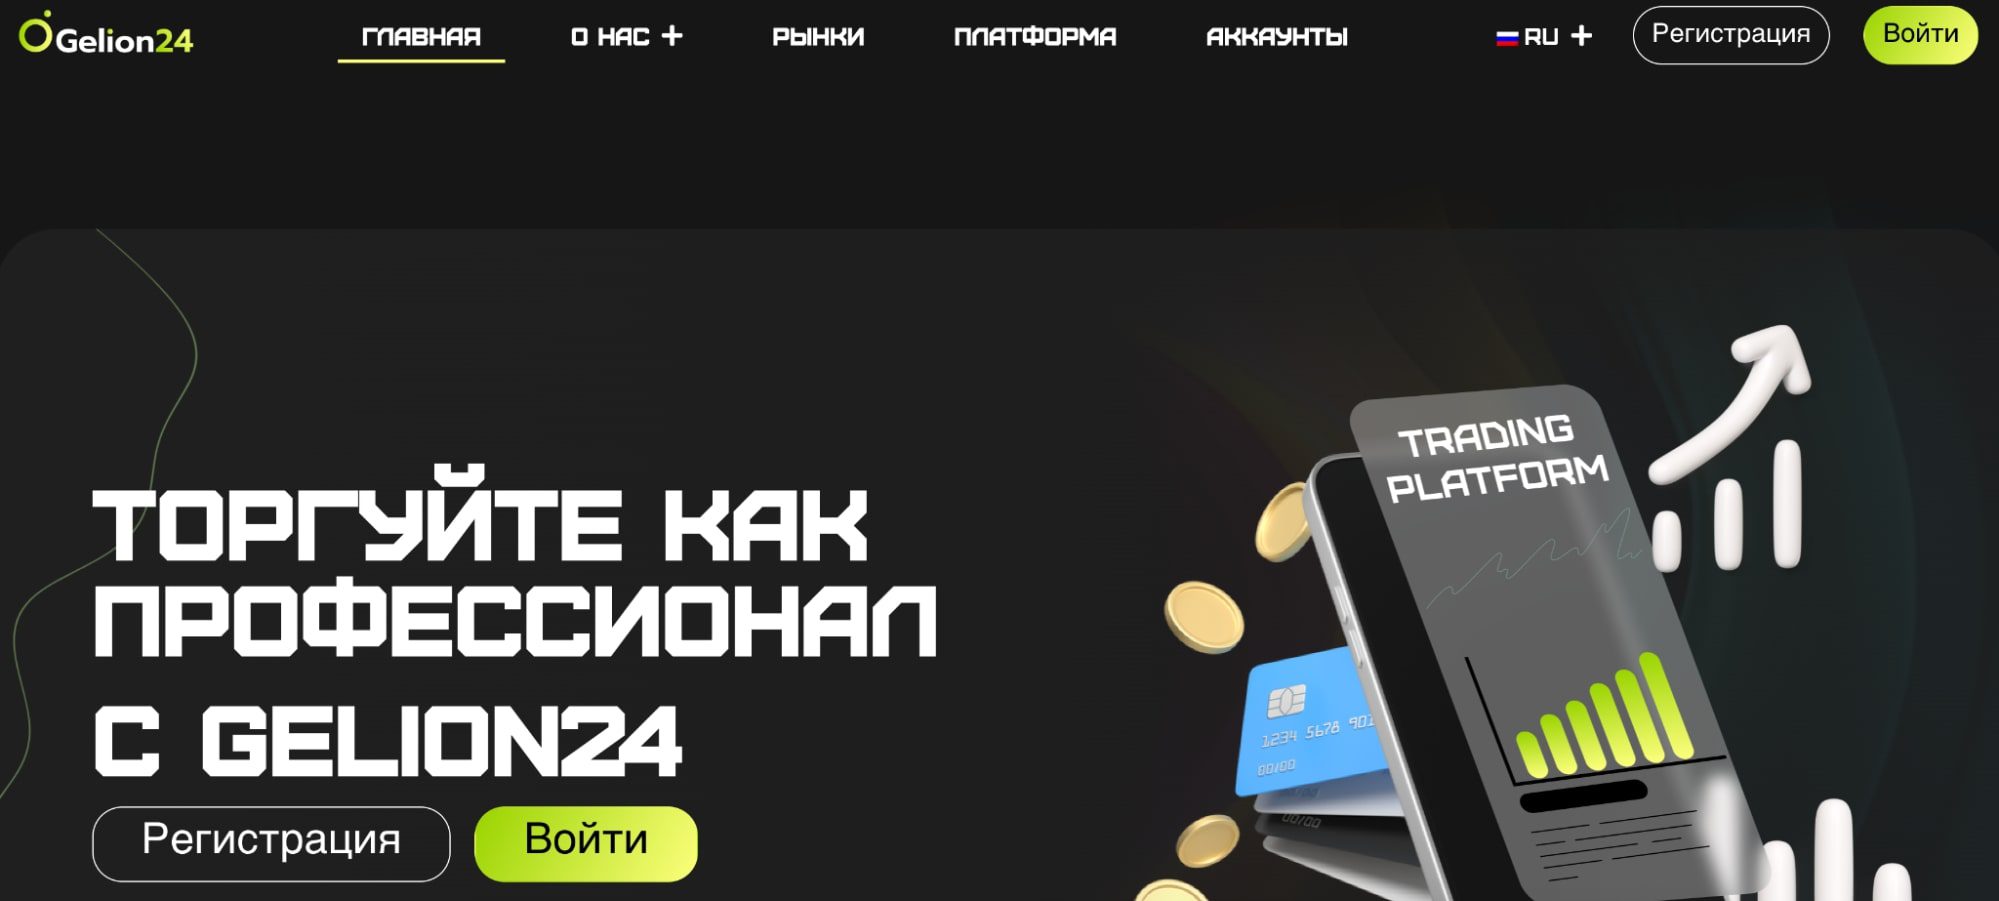 Gelion24.com.ru сайт